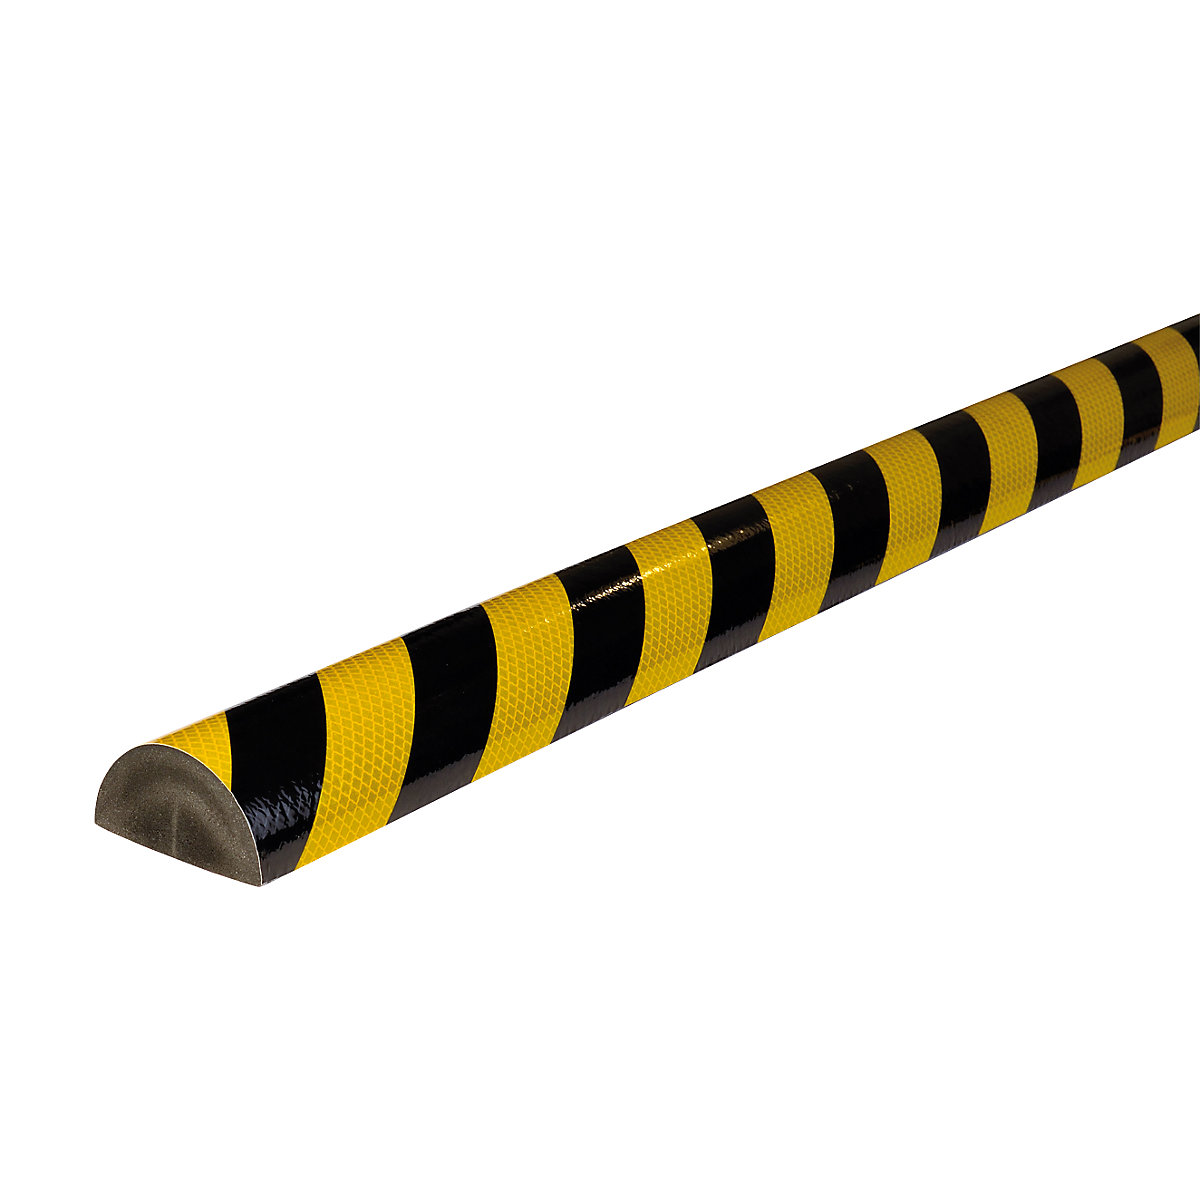 Knuffi®-oppervlaktebescherming – SHG, type C+, stuk van 1 m, geel/zwart, reflecterend-19